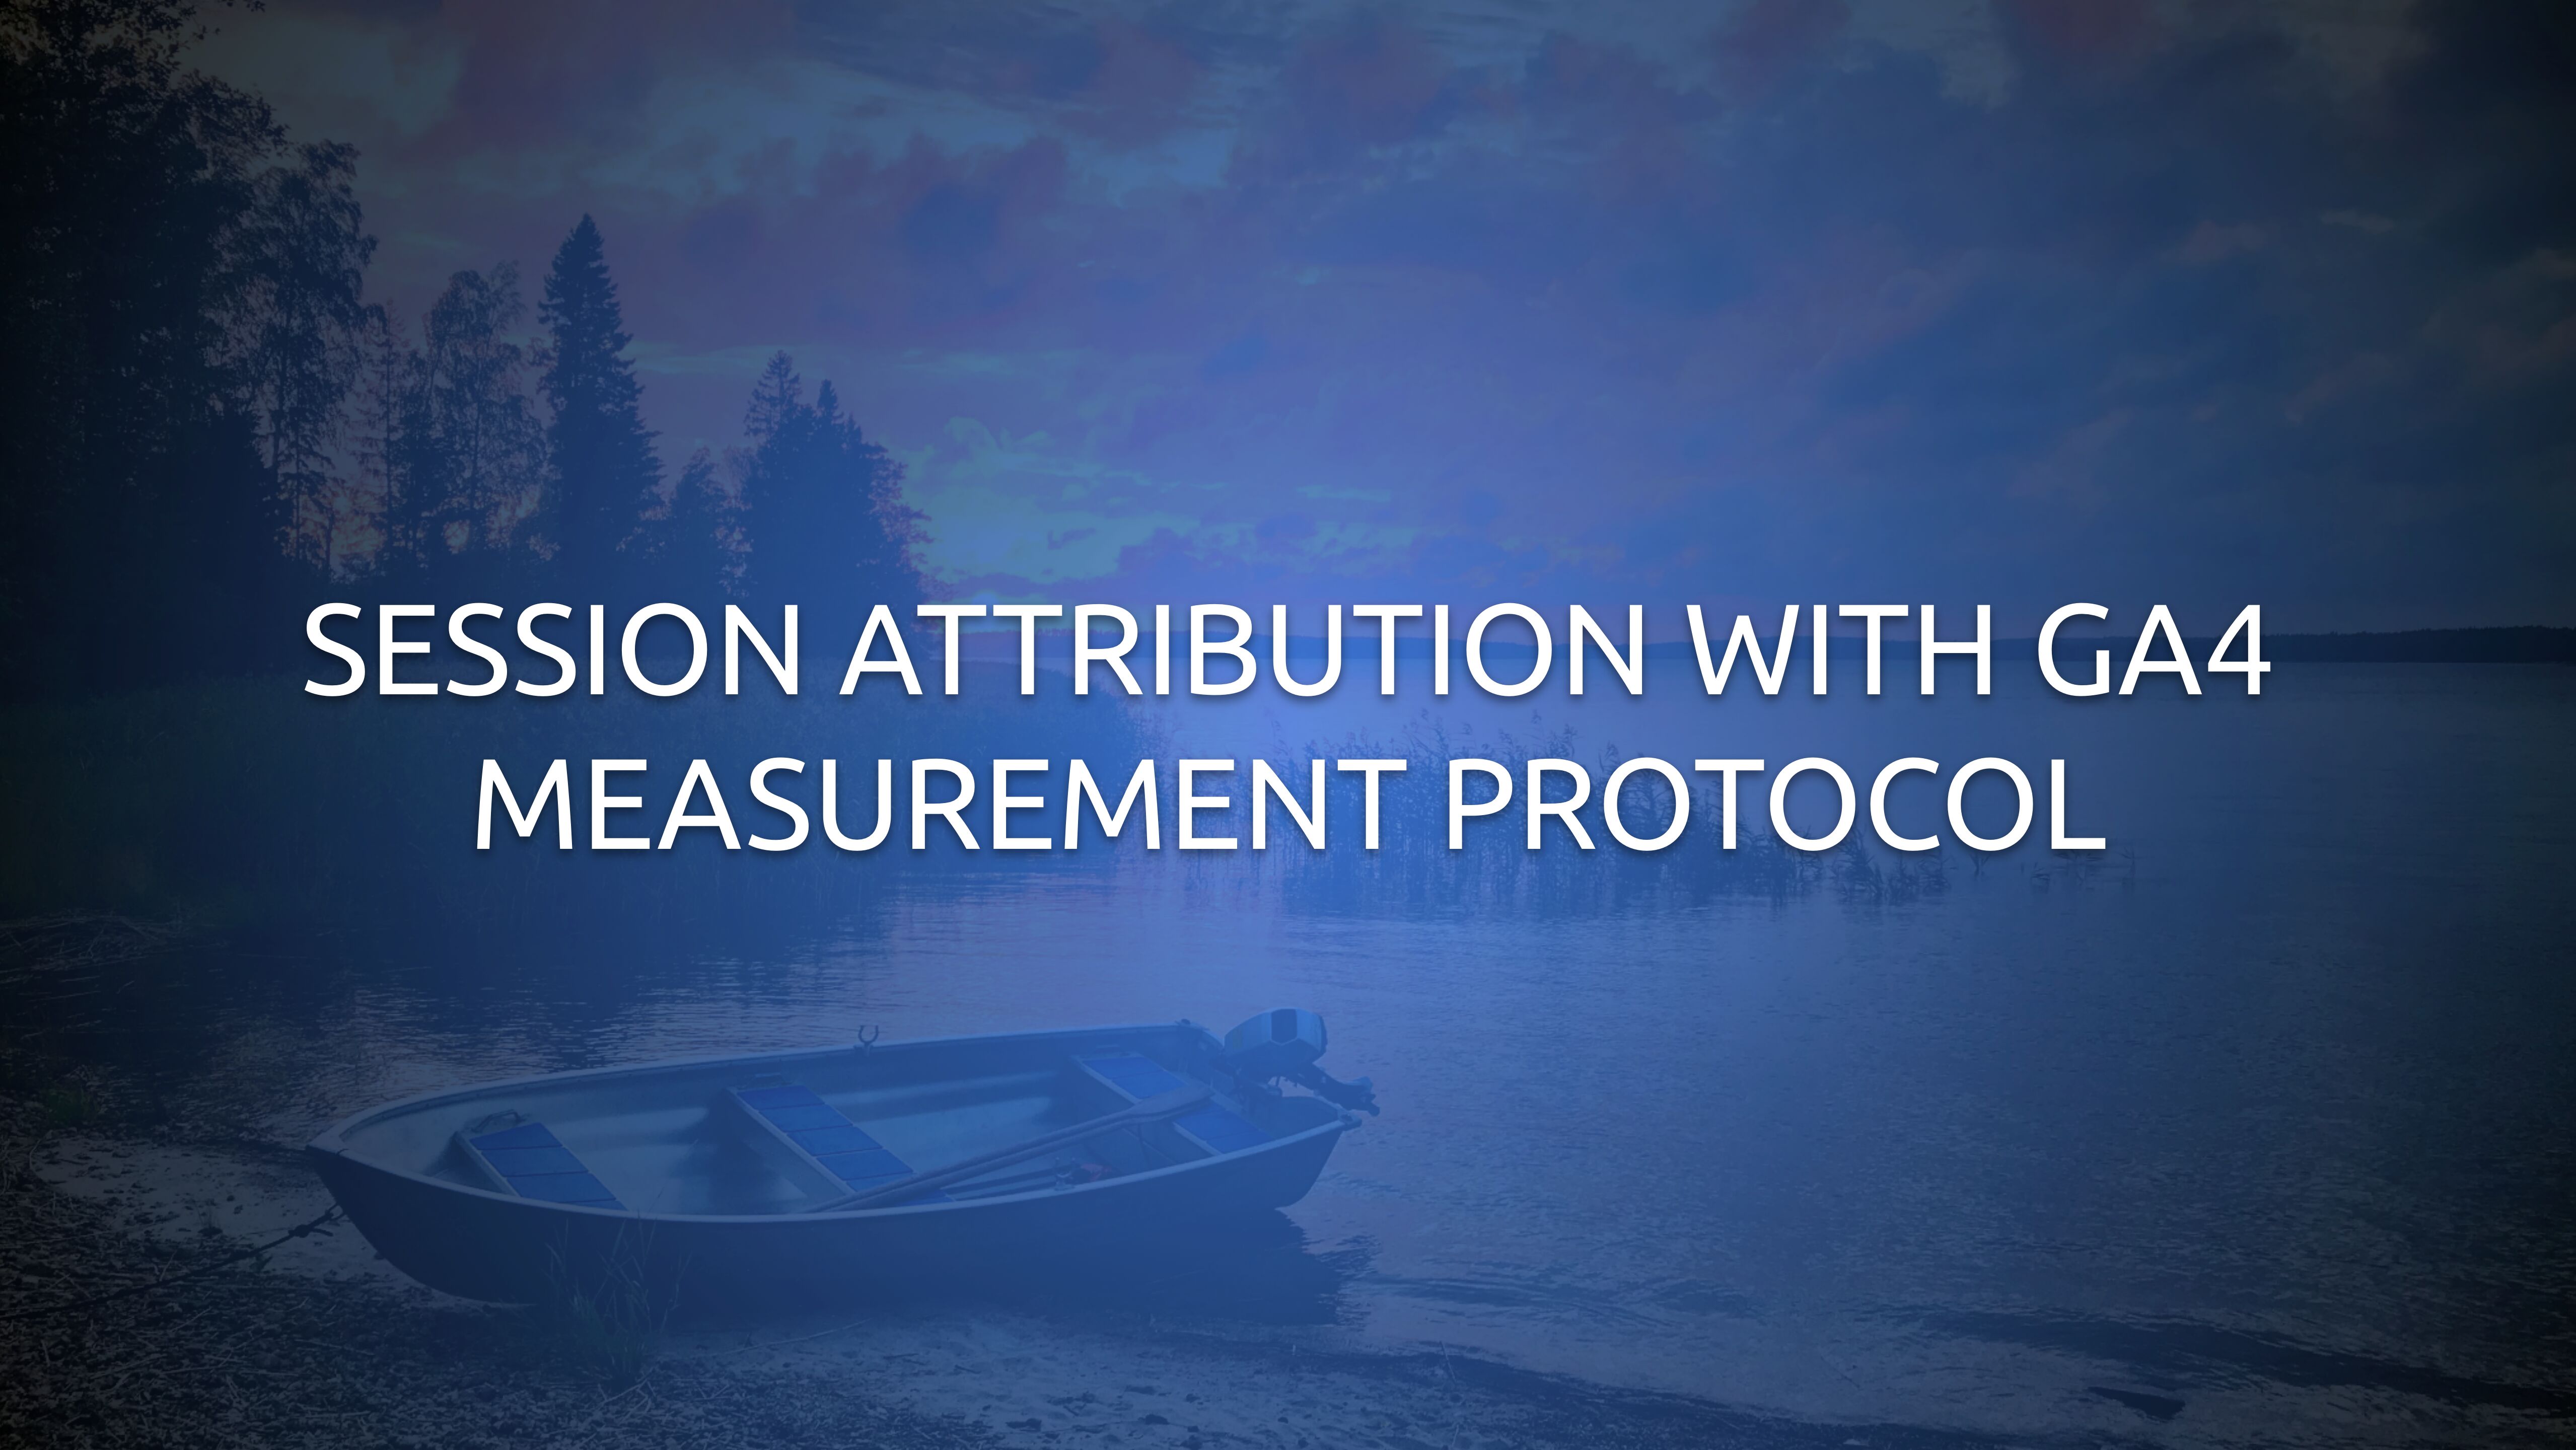 Session Attribution With GA4 Measurement Protocol